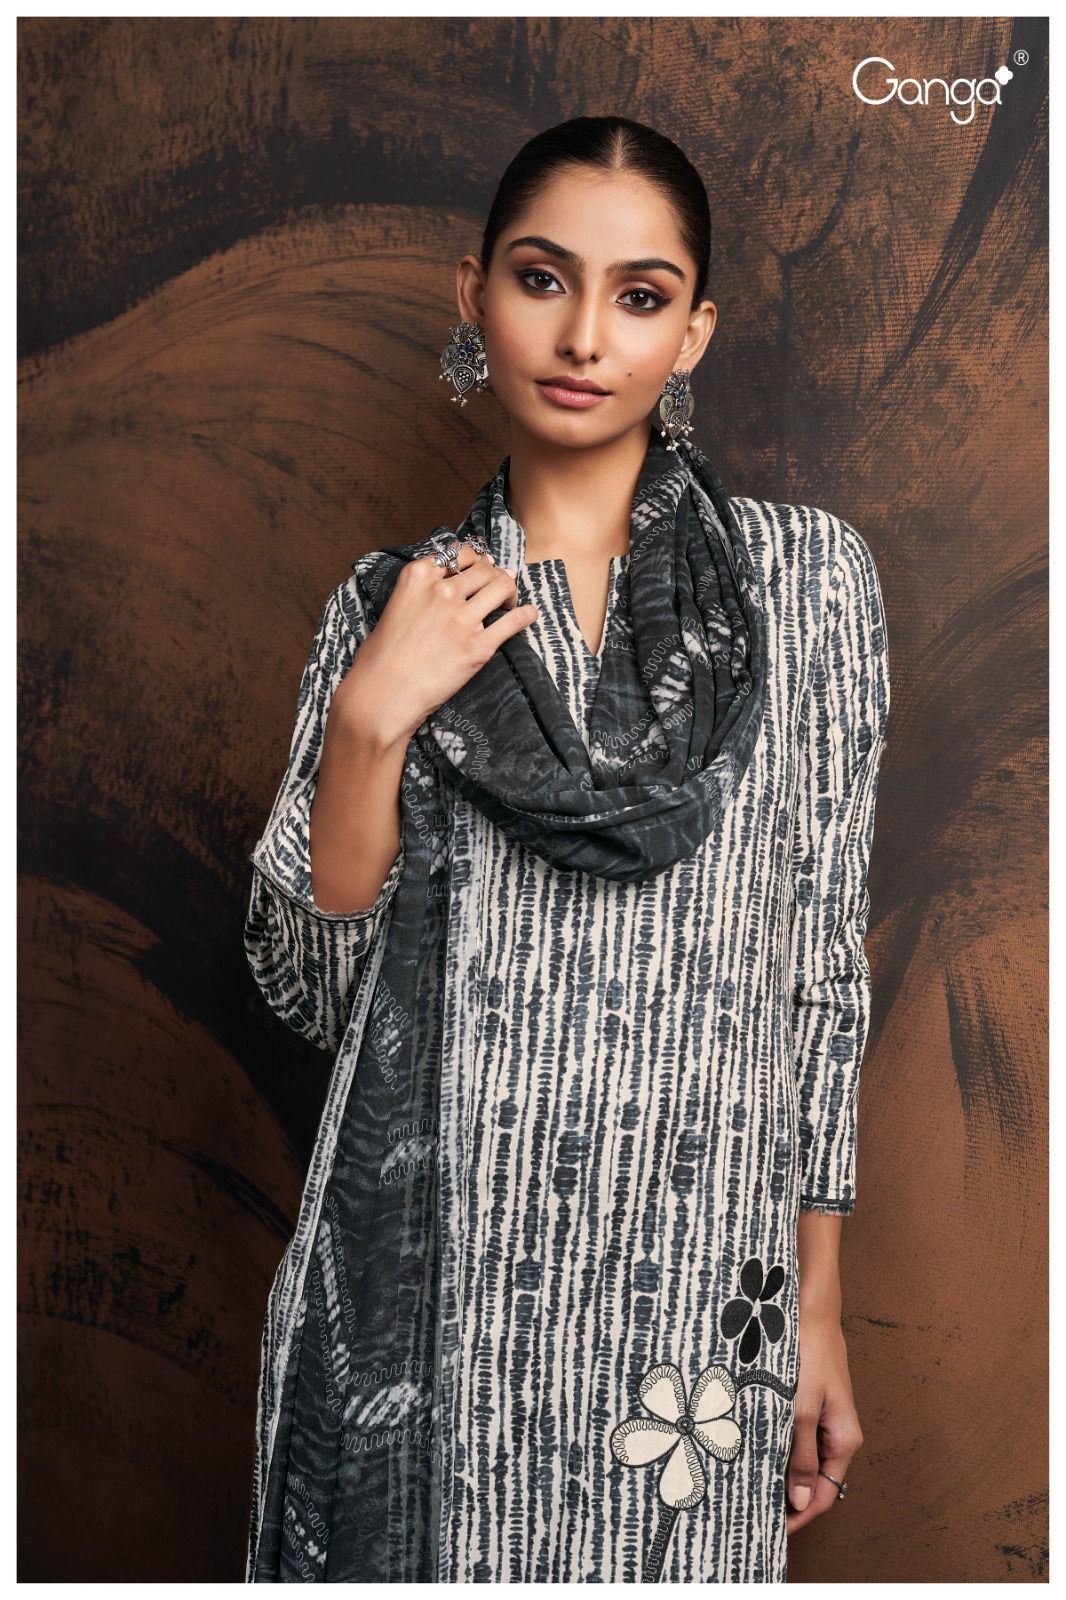 Pranshi-2314 Ganga Premium Cotton Plazzo Style Suits